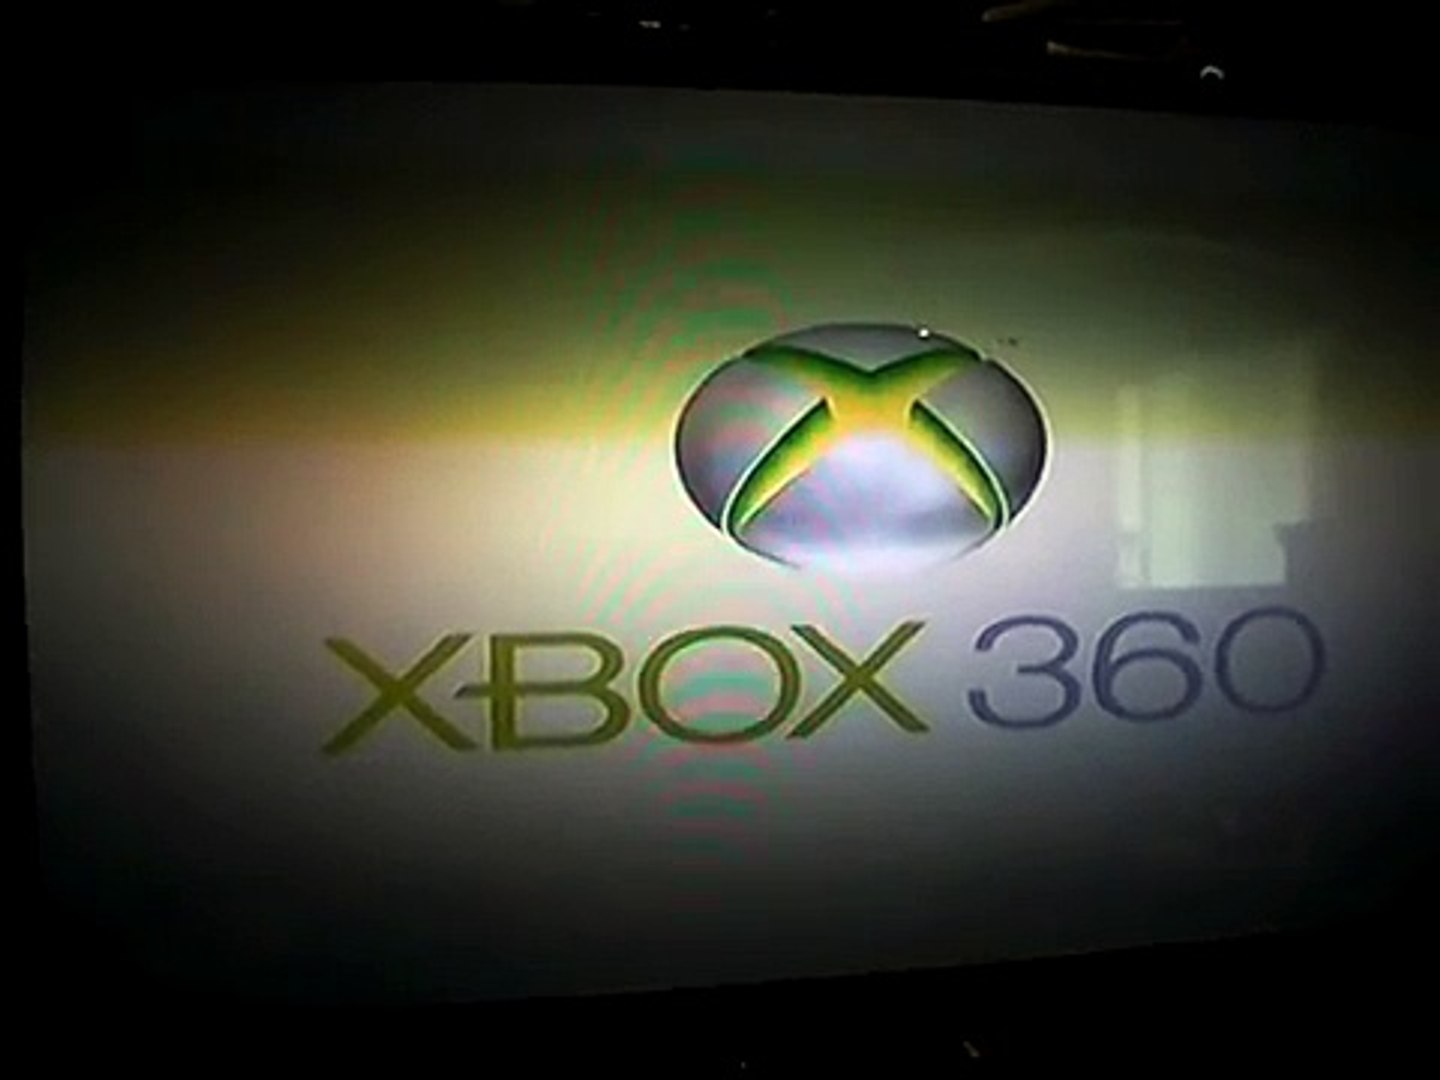 xbox 360 error E68 fix, 2 ways - video Dailymotion